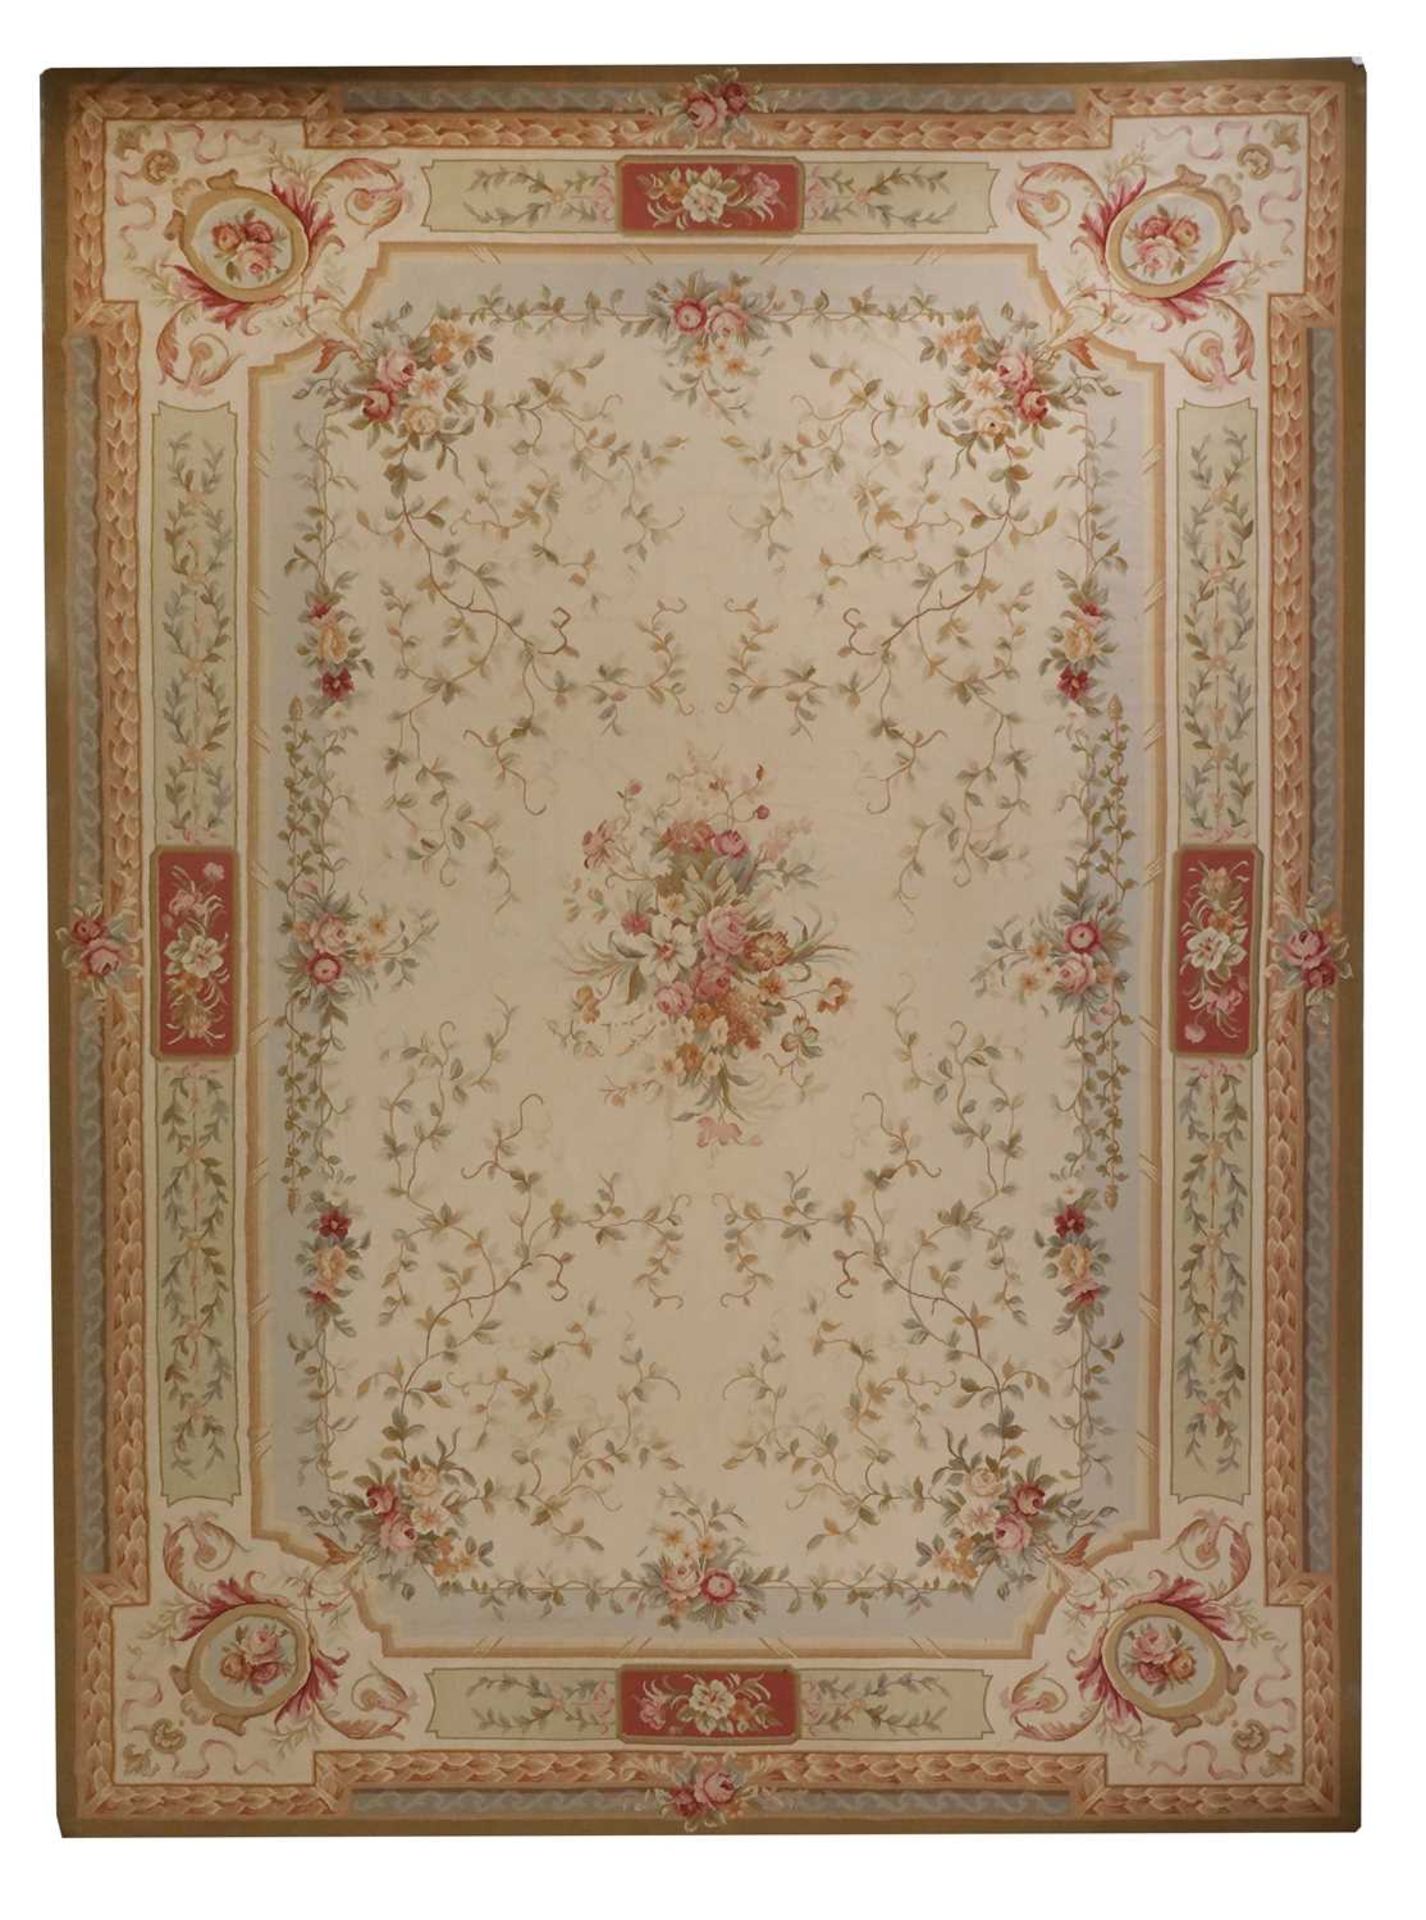 An extremely large Aubusson design needlework carpet,